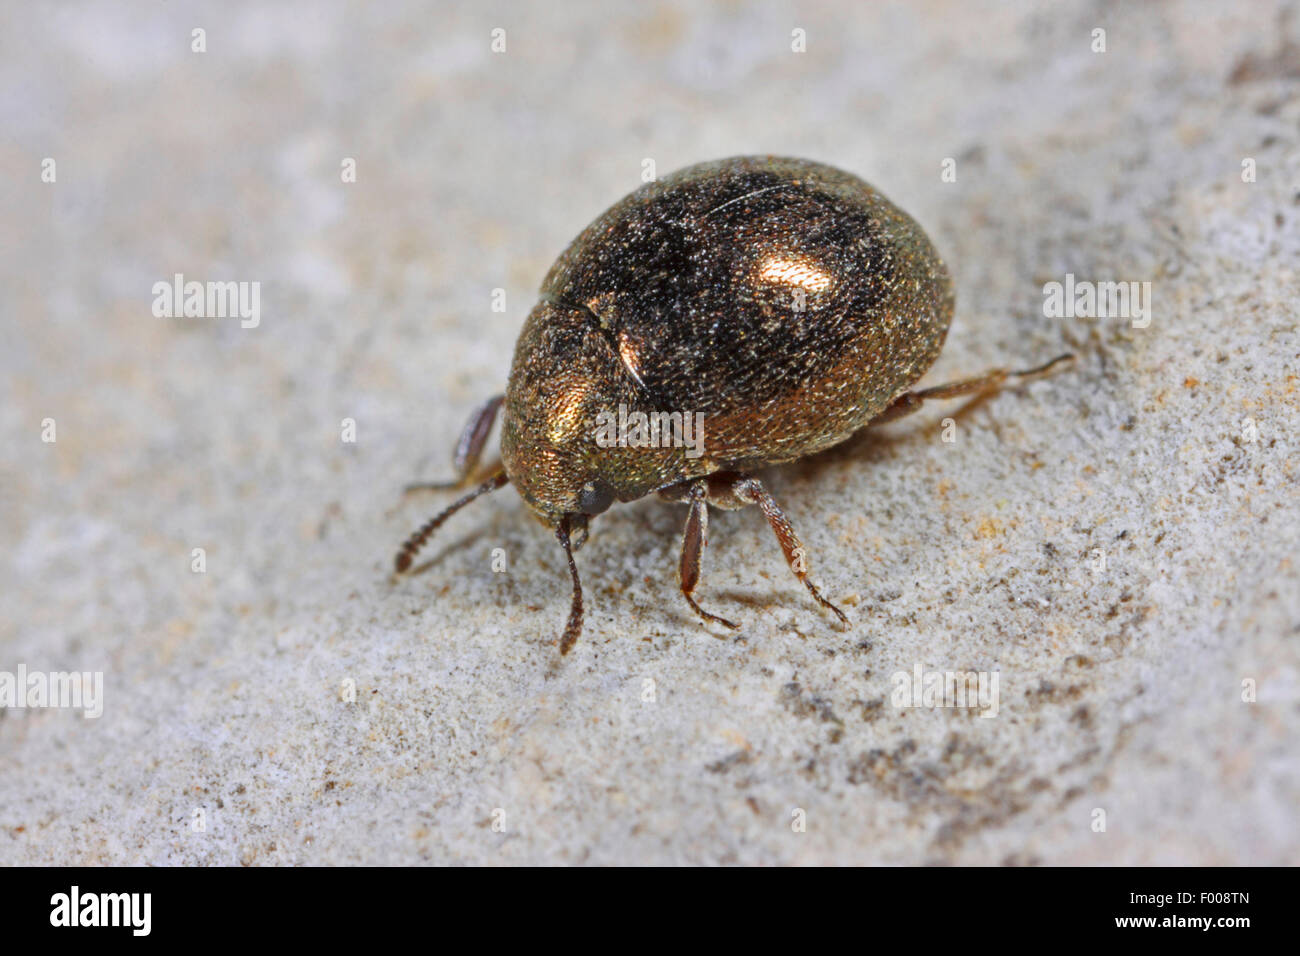 Pill beetle (Lamprobyrrhulus nitidus, Byrrhus nitidus), on a stone, full-length portrait, Germany Stock Photo